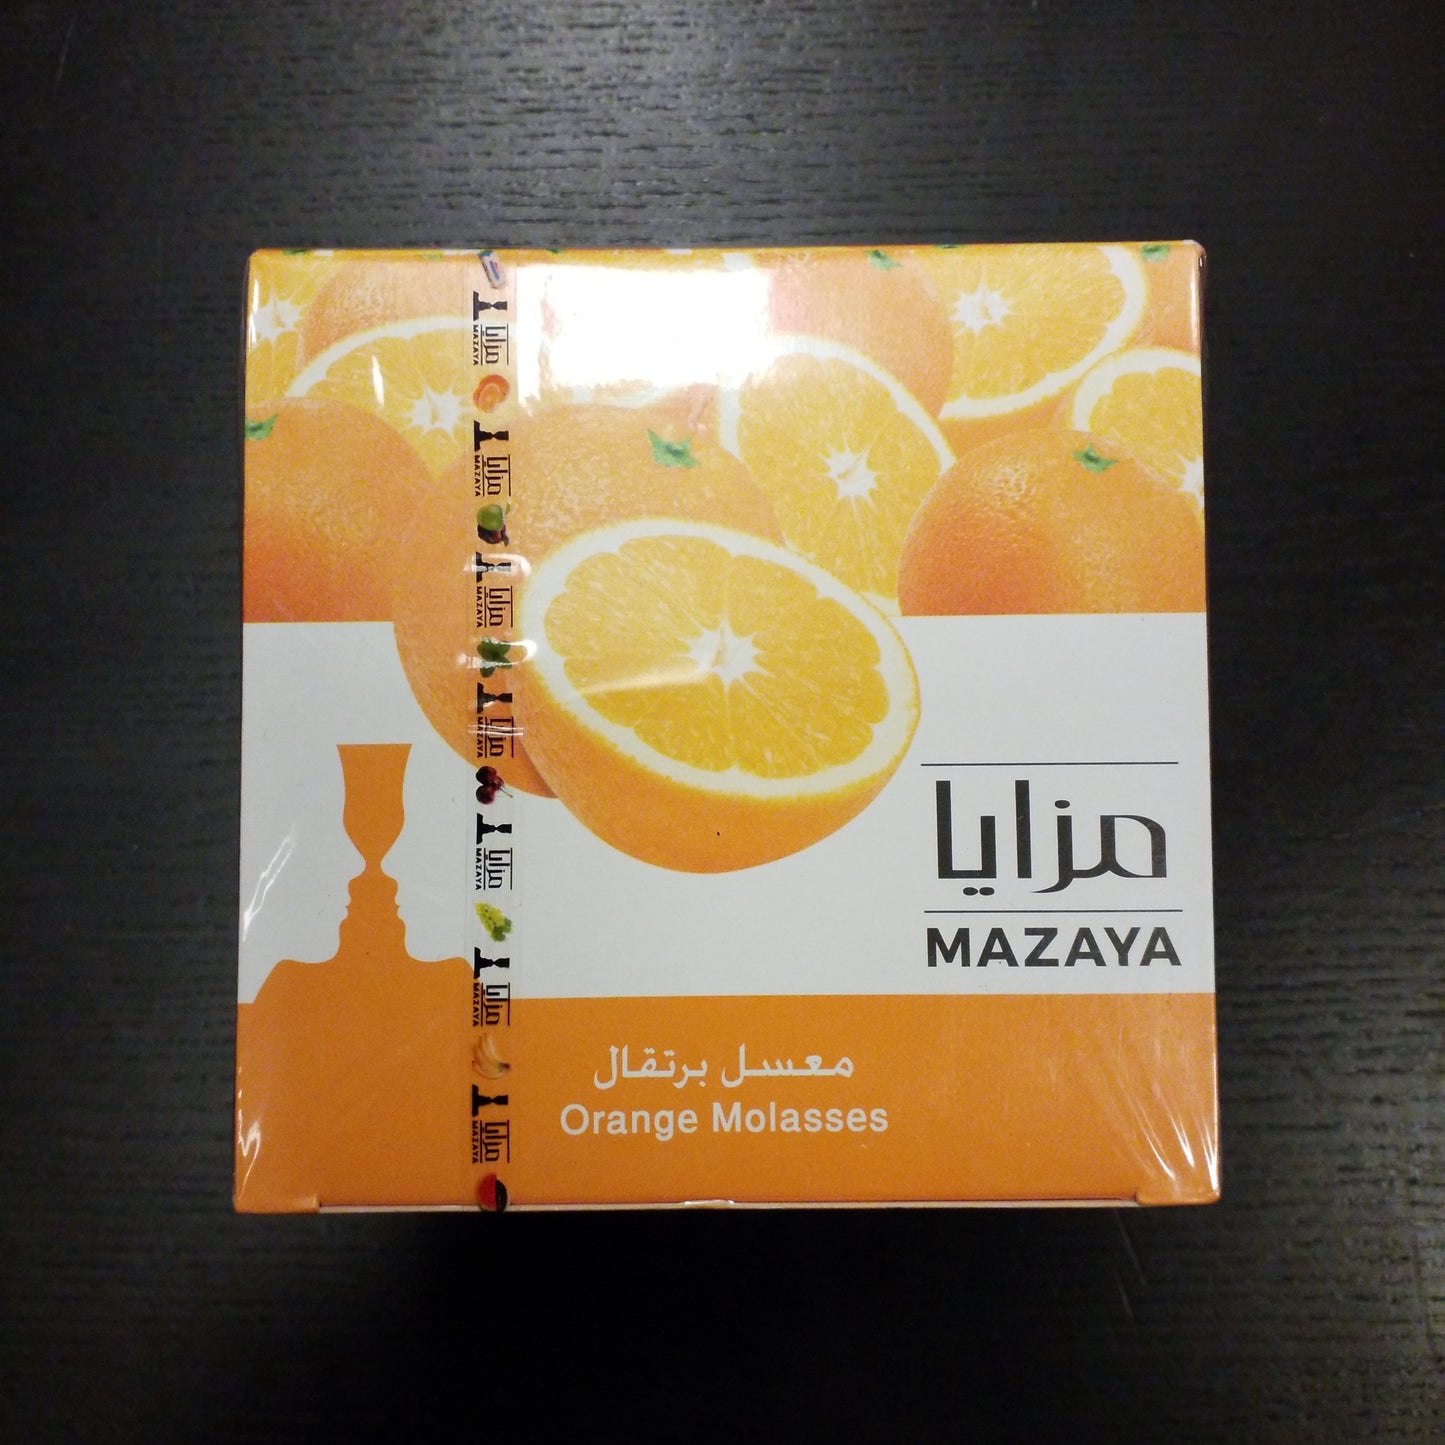 Mazaya orange molasses